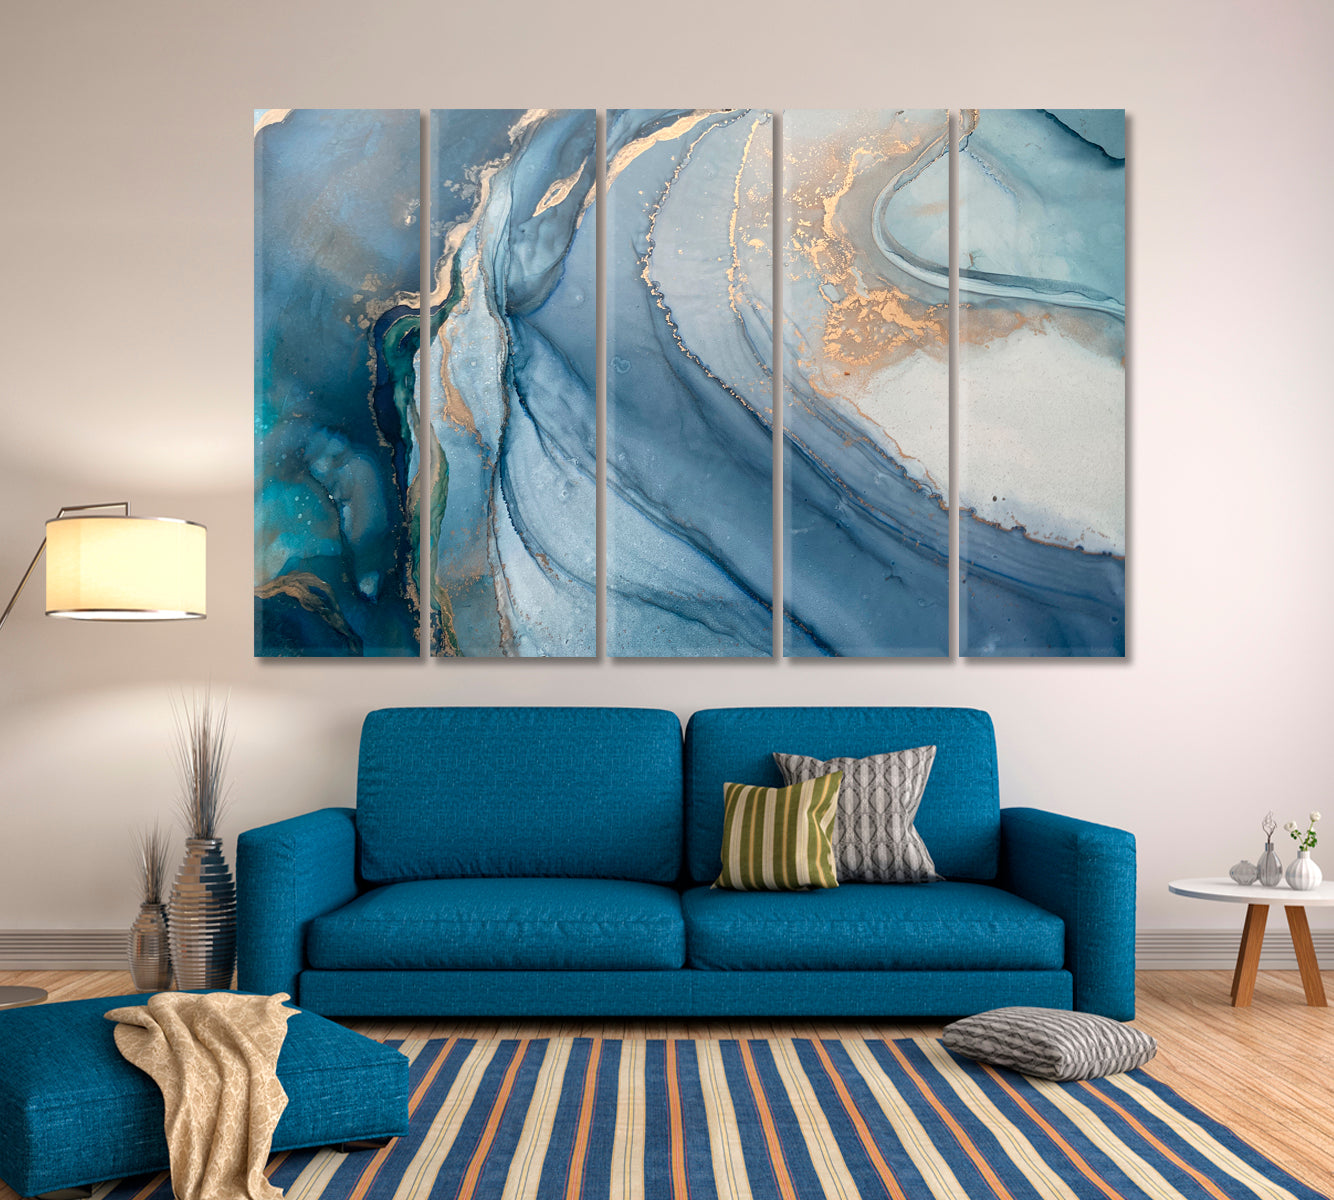 ABSTRACT MARBLE VEINS Translucent Blue Fluid Painting Fluid Art, Oriental Marbling Canvas Print Artesty   